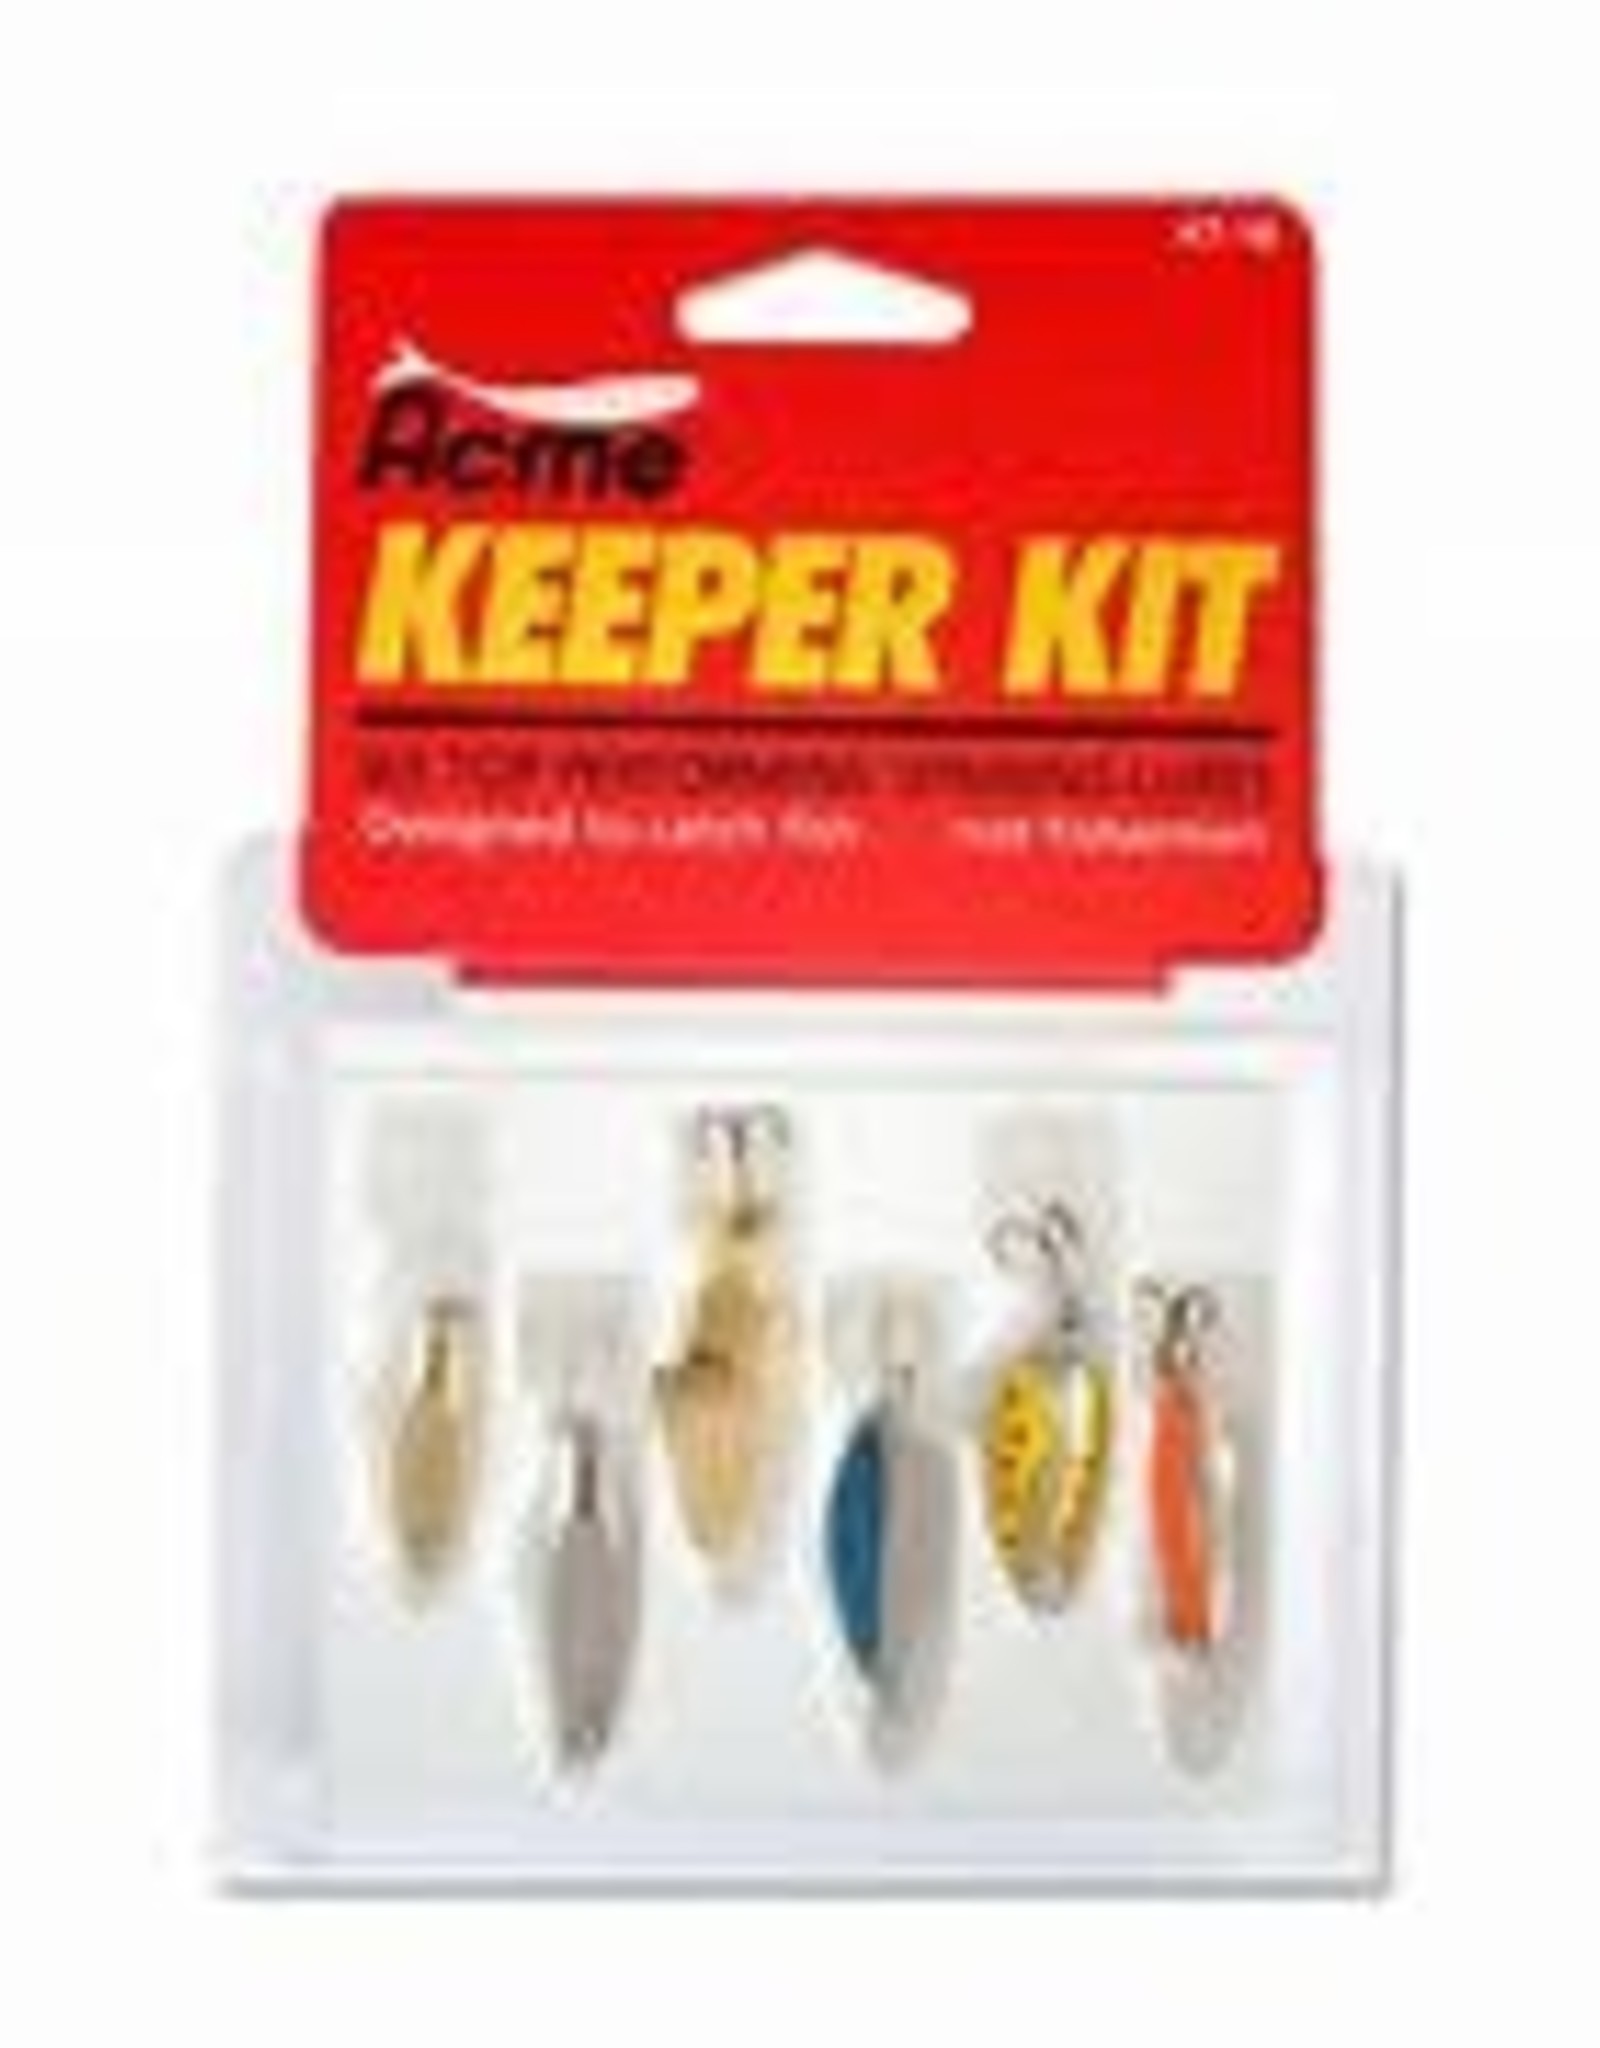 Acme Keeper Kit